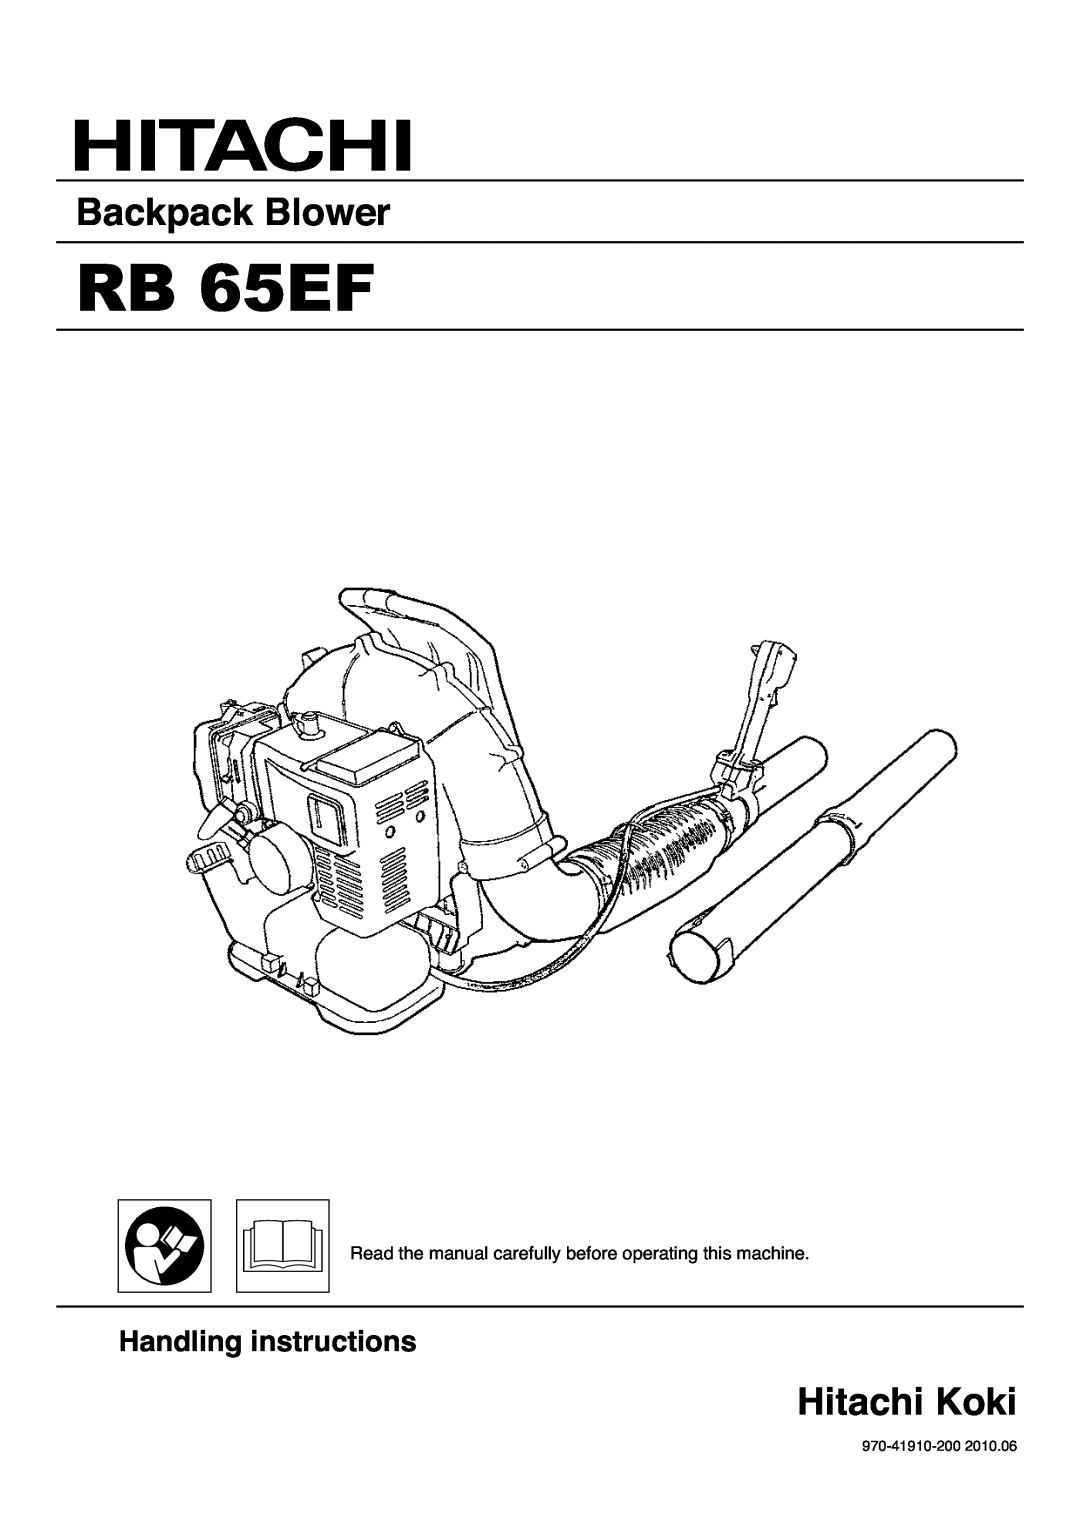 Hitachi RB 65EF manual Handling instructions, Backpack Blower, Hitachi Koki, 970-41910-2002010.06 